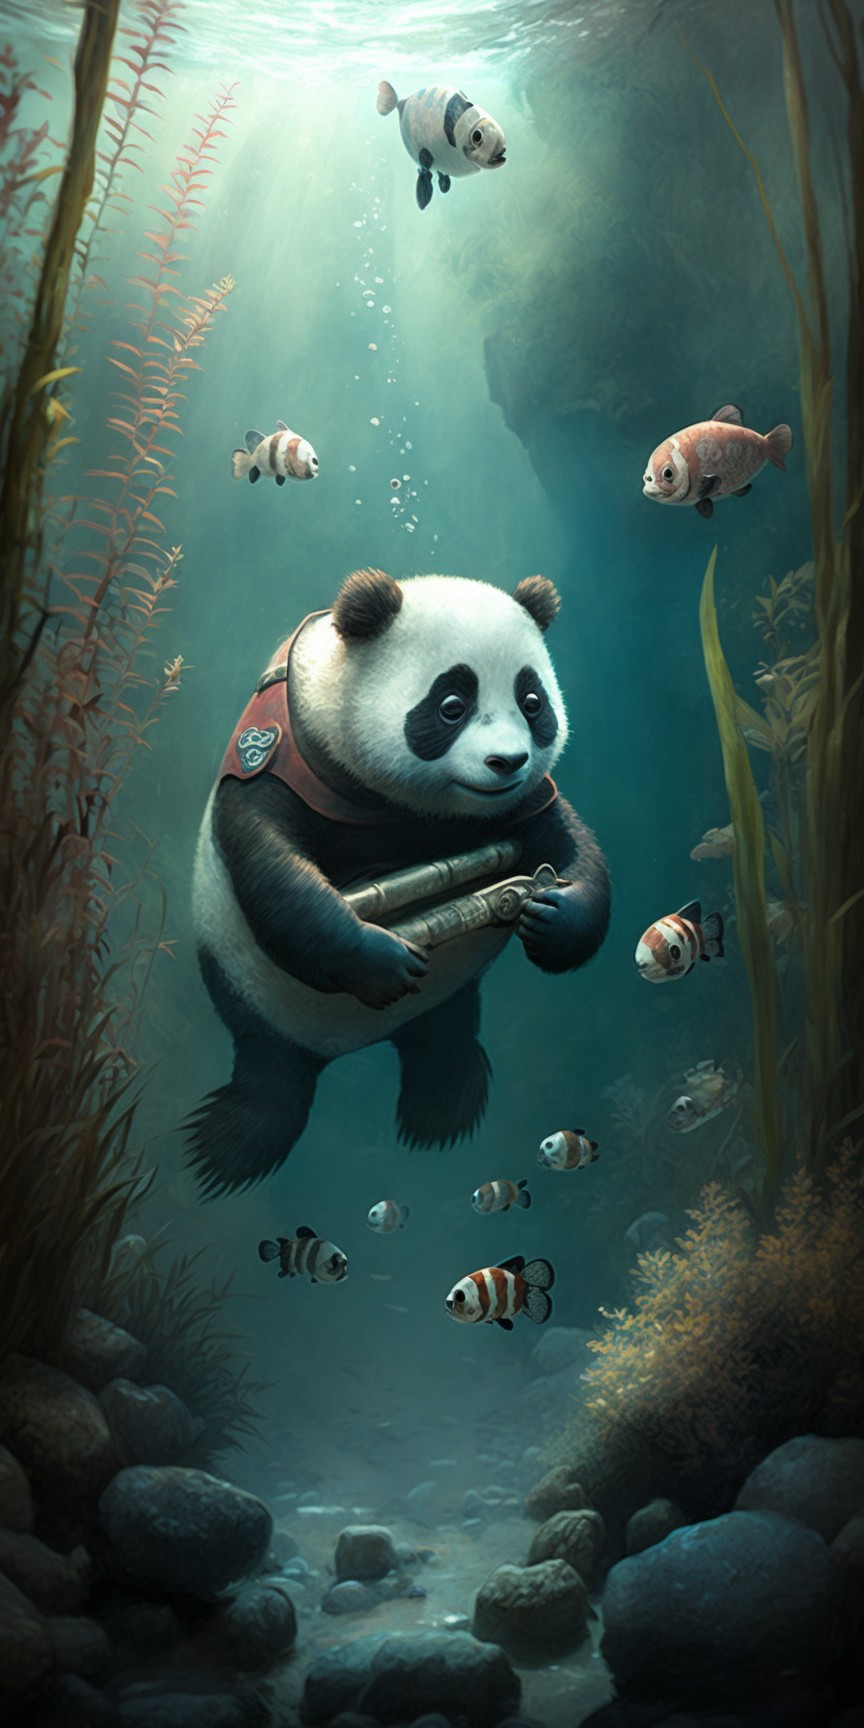 Panda catching fish in water